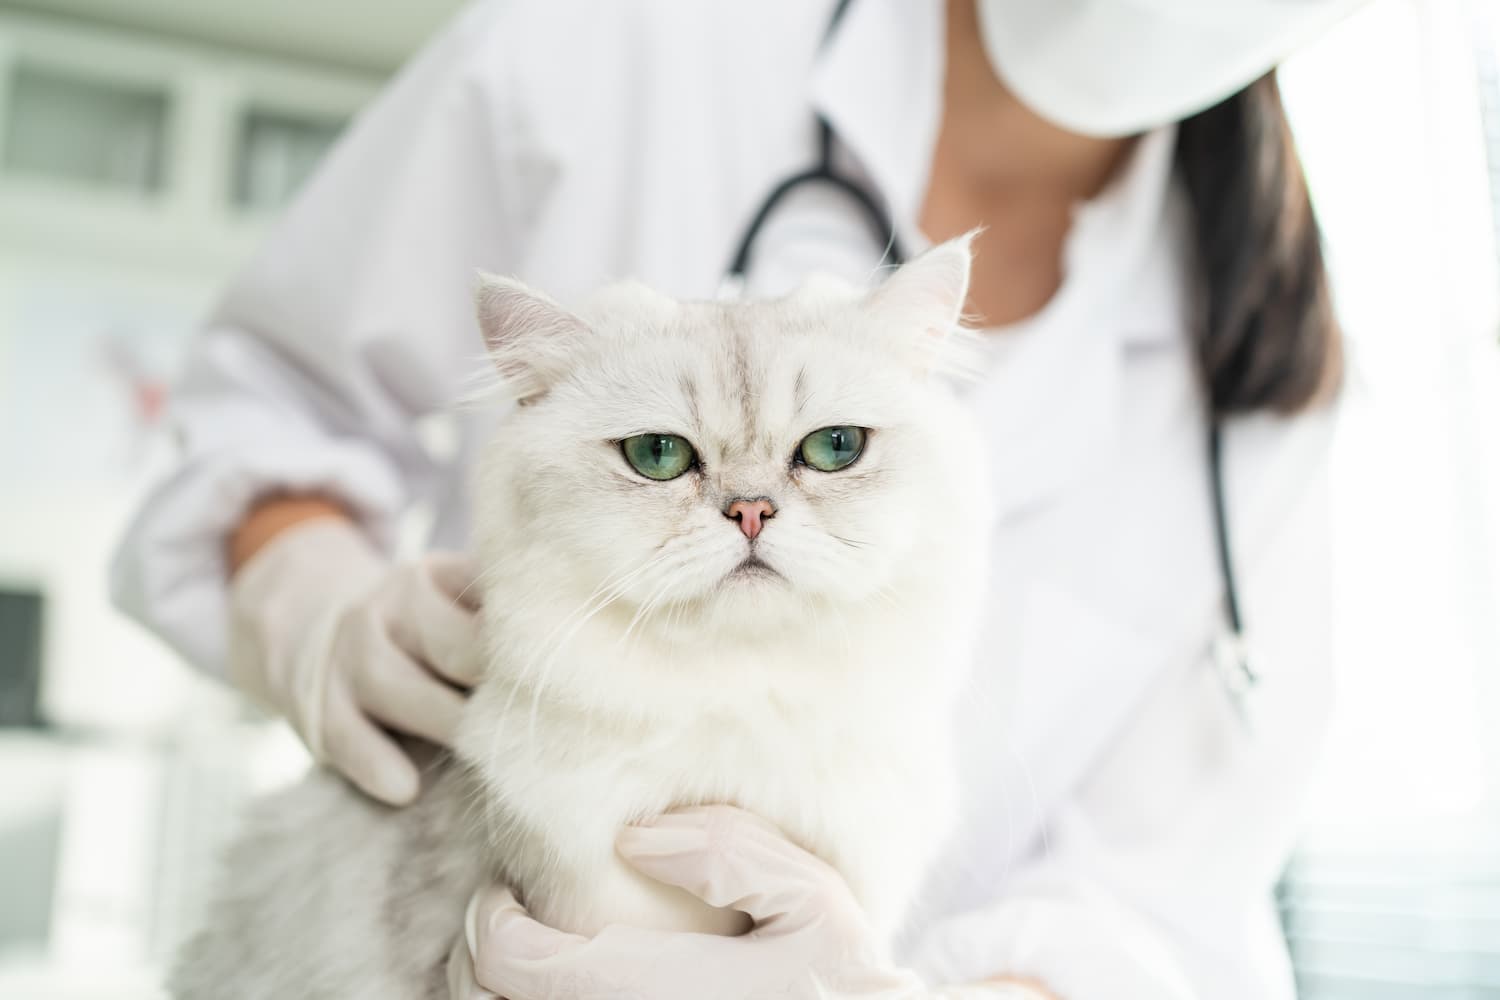 asian-veterinarian-examine-cat-during-appointment-2021-12-09-17-50-52-utc-1